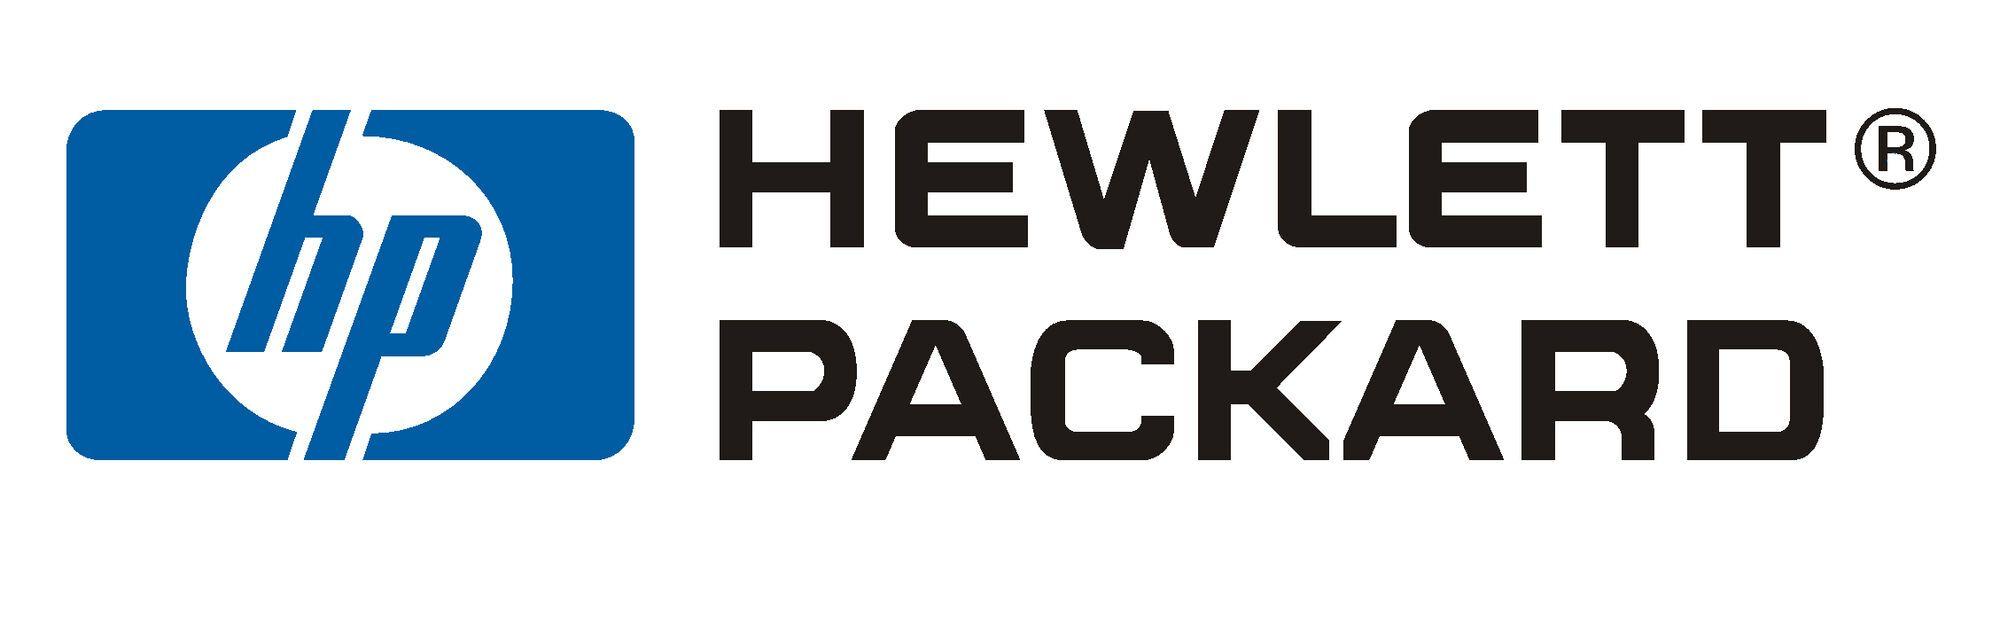 Packard Logo - Hewlett-Packard/Other | Logopedia | FANDOM powered by Wikia